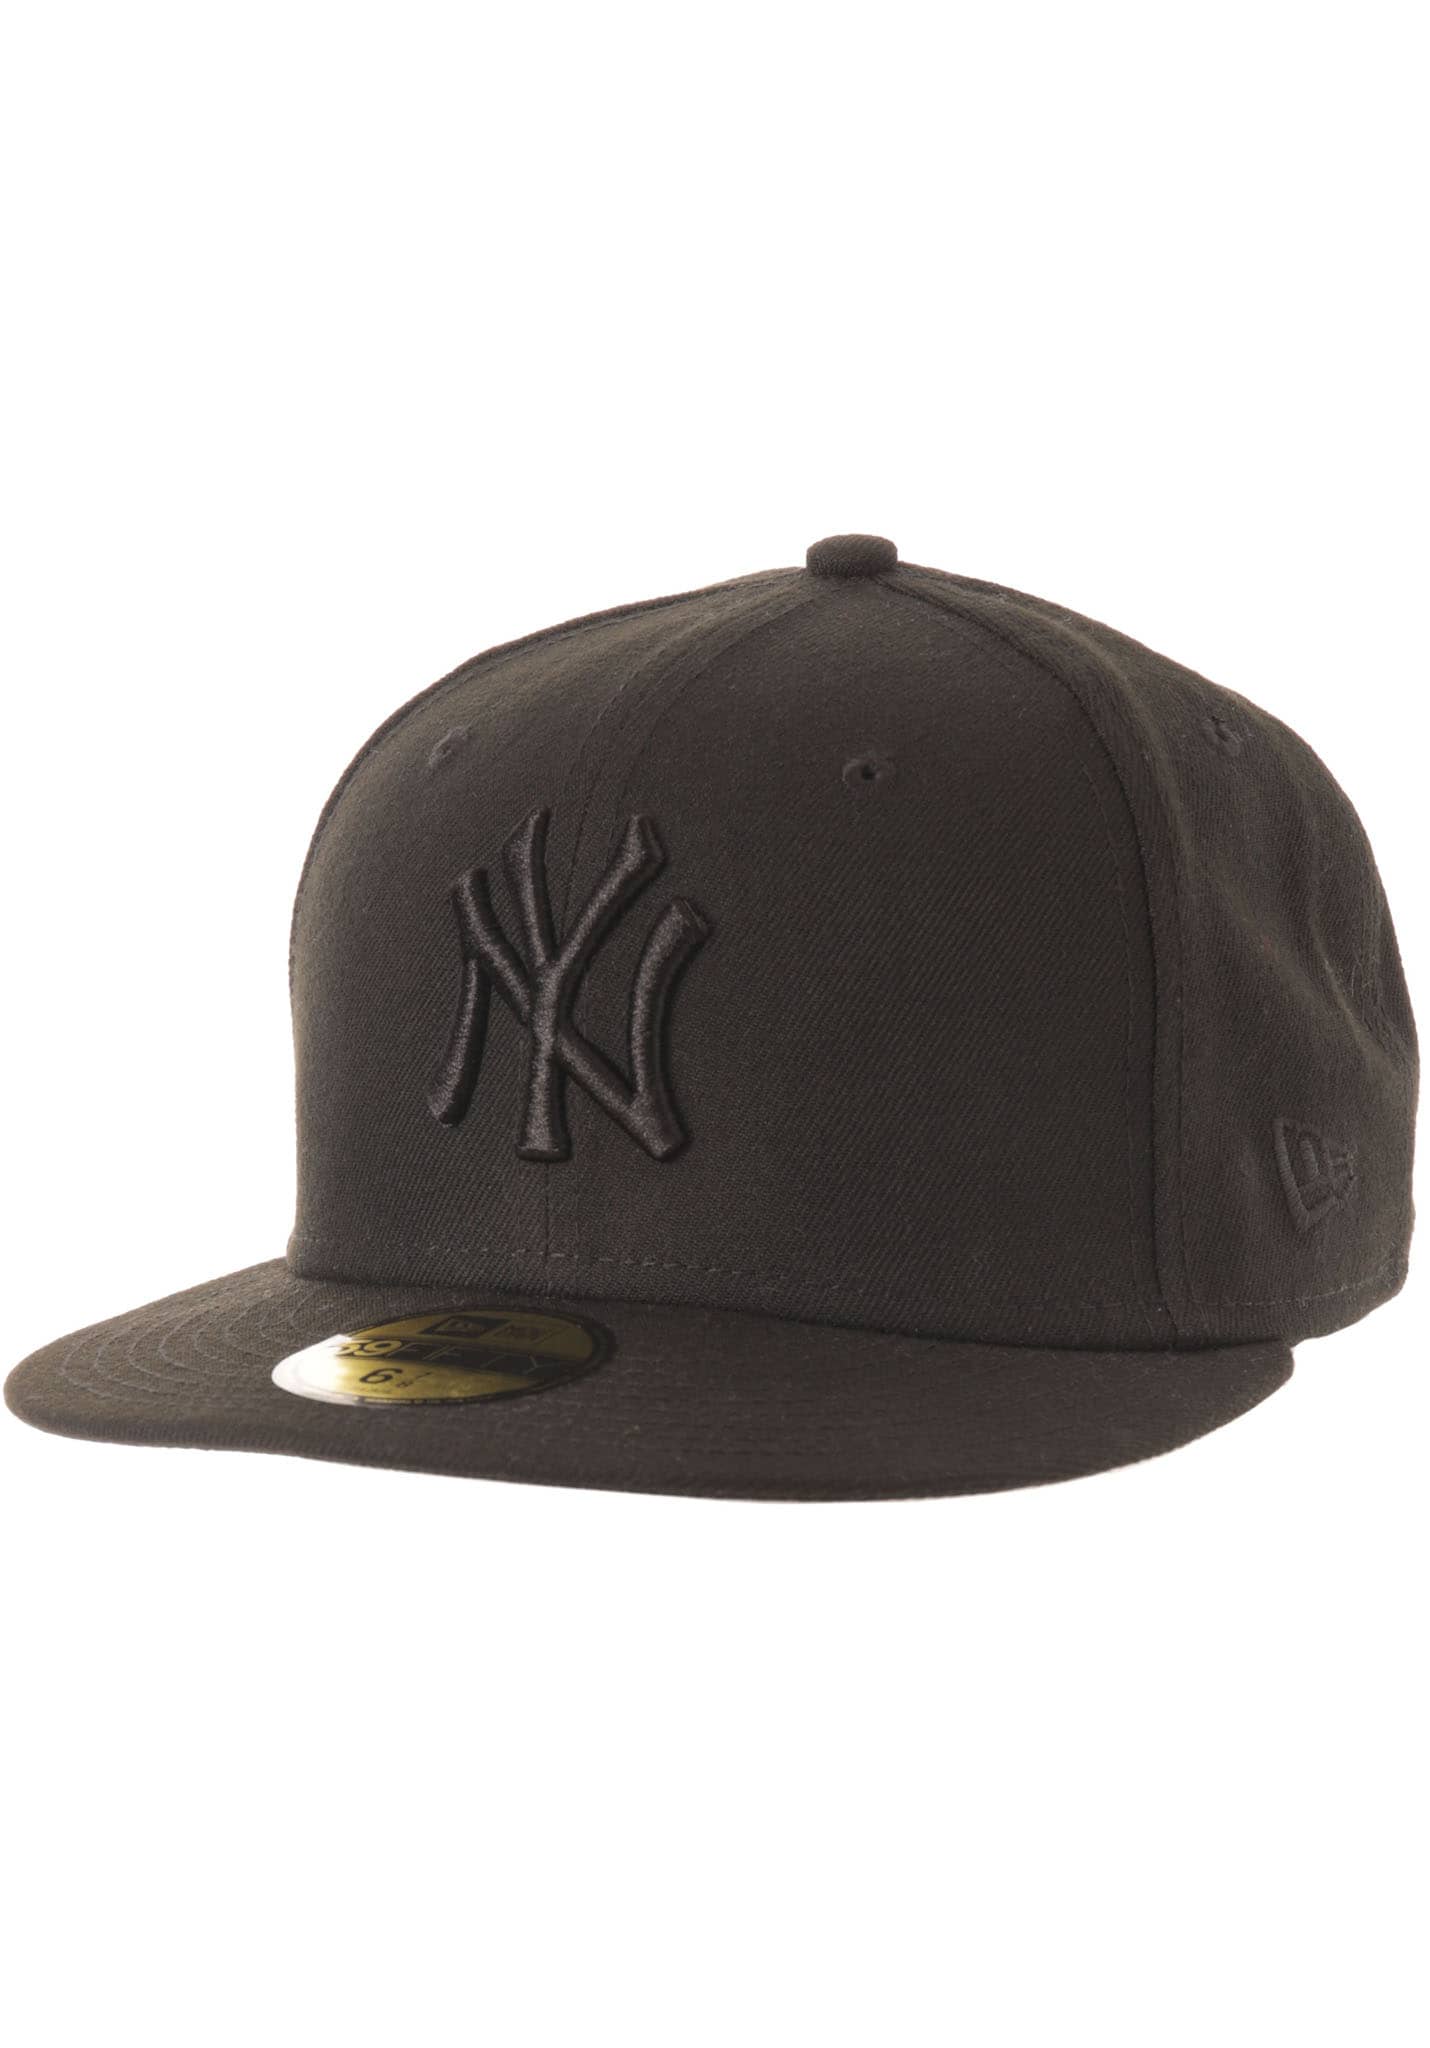 New Era NEW Era 59Fifty New York Yankees
 black/black 8 inch Caps Fitted / New Era Caps black/black 7 7/8